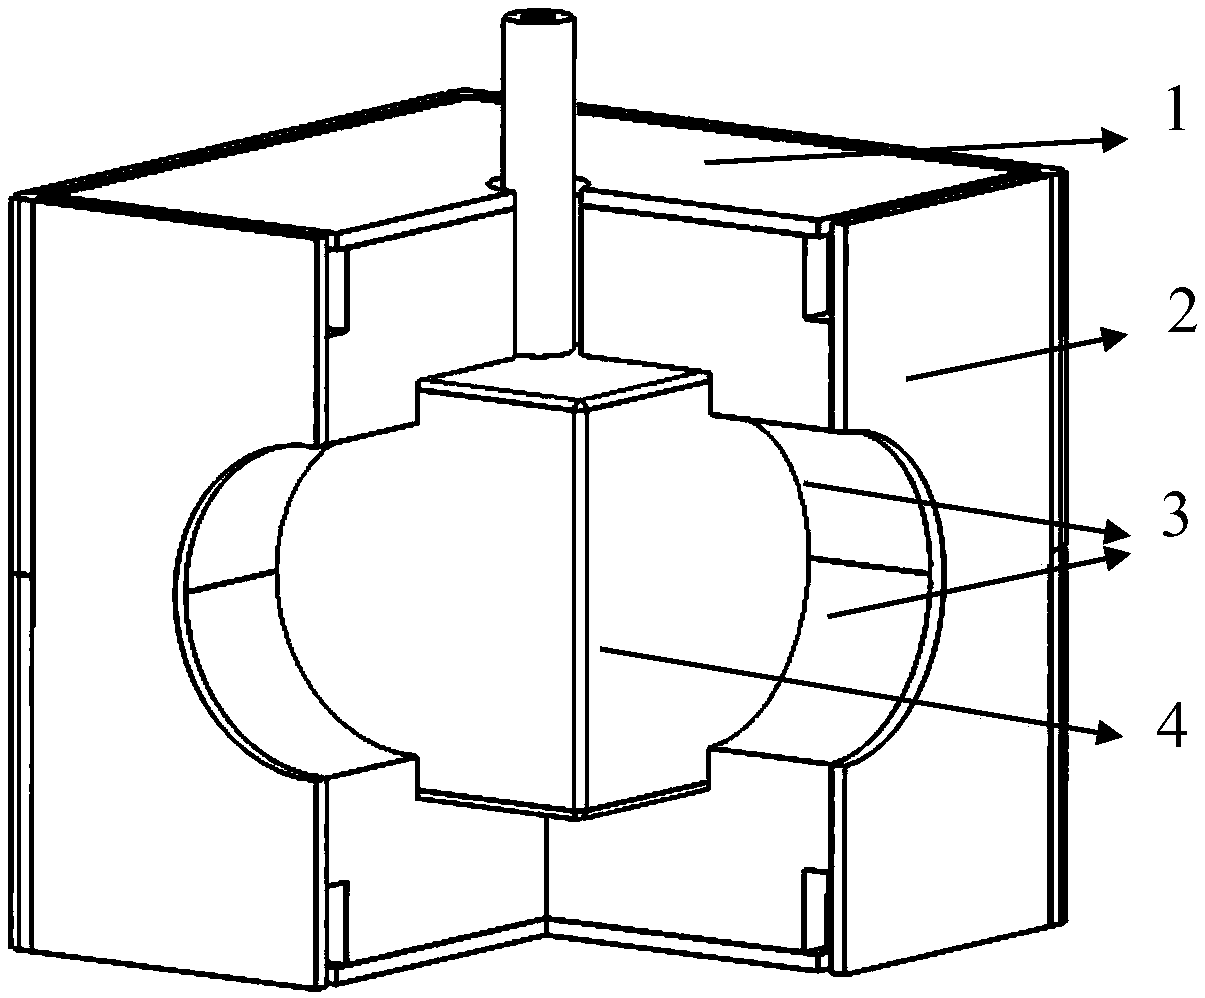 Non-uniform heating method for alkali metal gas chamber based on finite element analysis